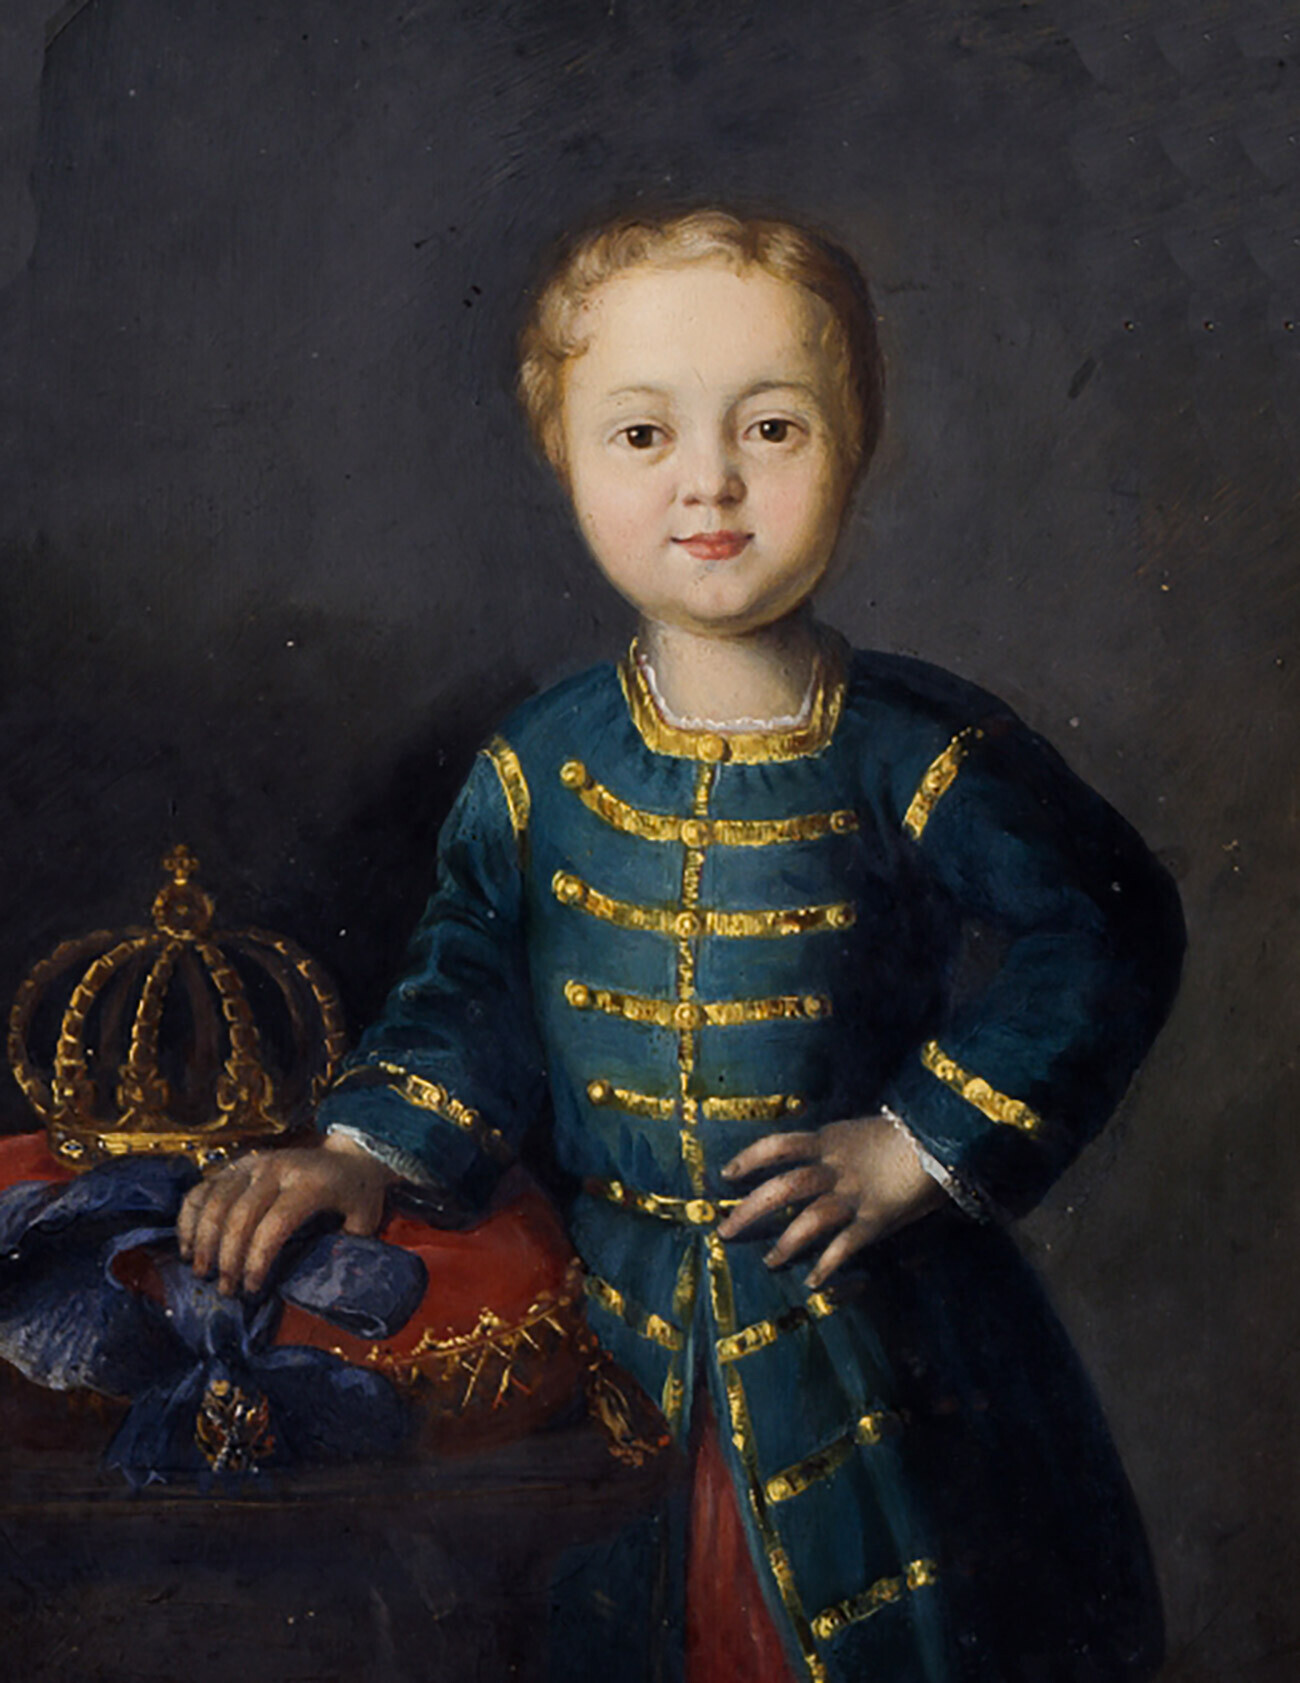 Retrato do imperador da Rússia Ivan 4° Antonovitch (1740 – 1764).